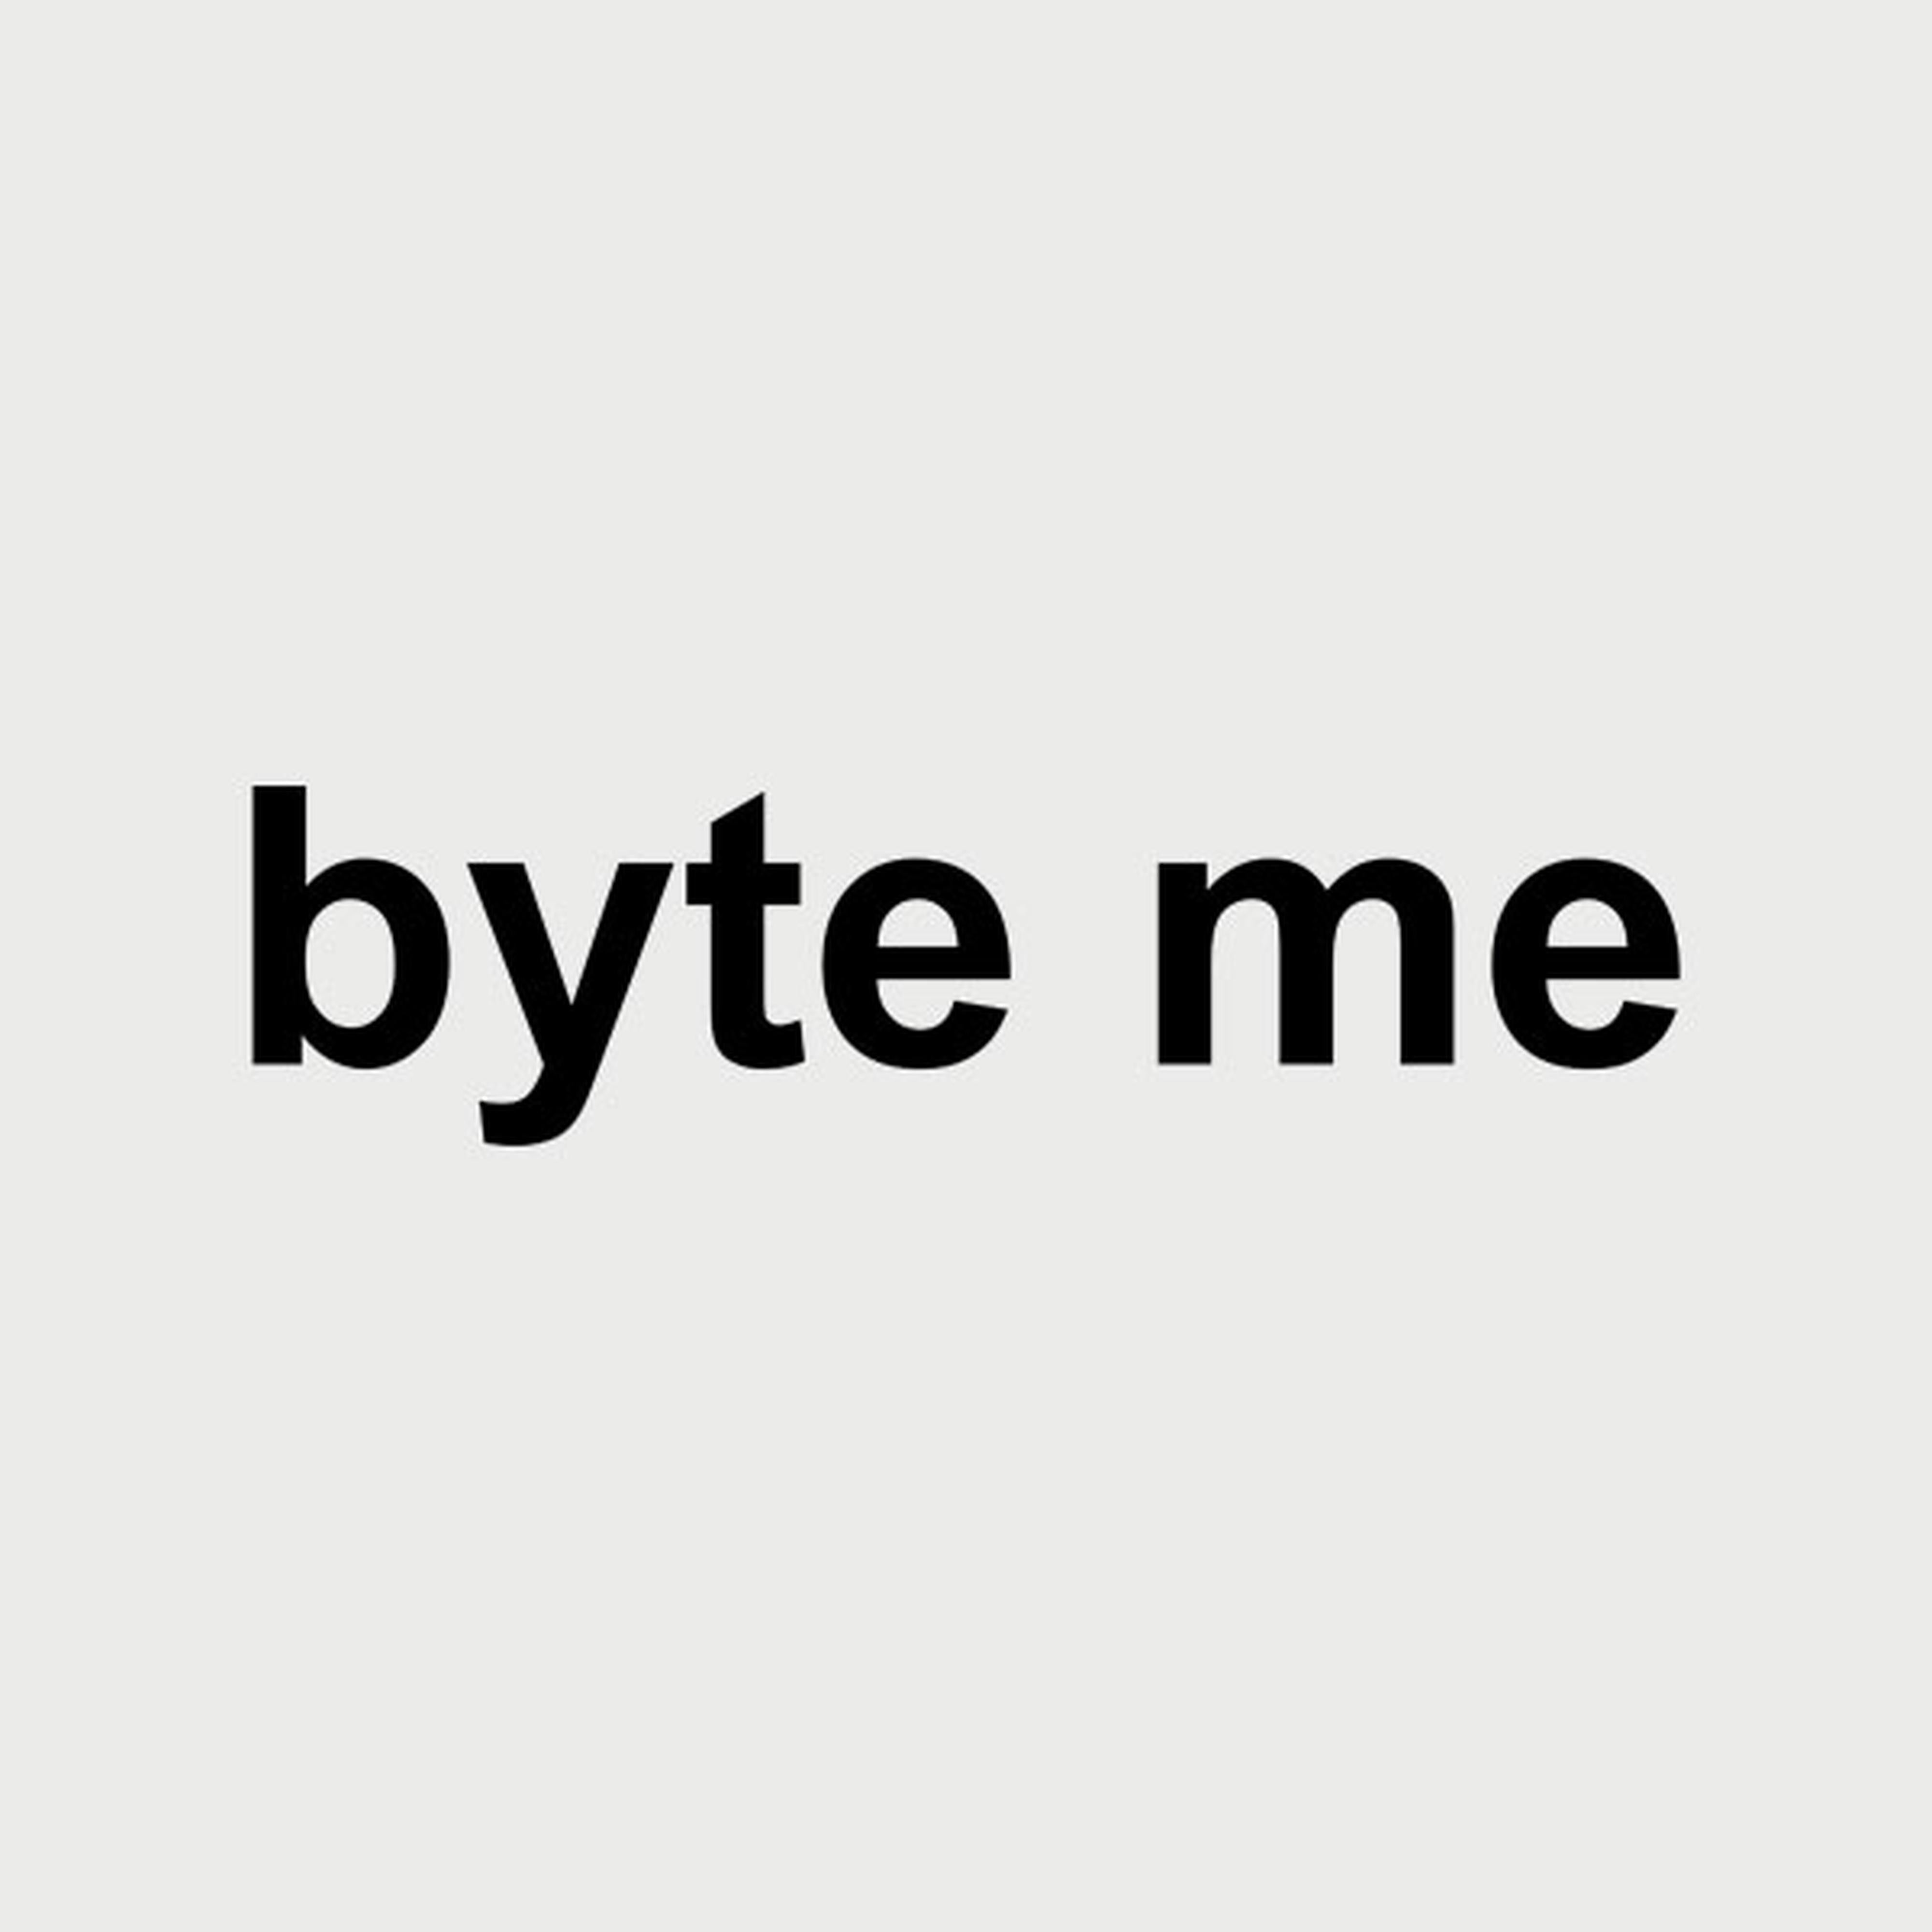 Byte me. - T-shirt